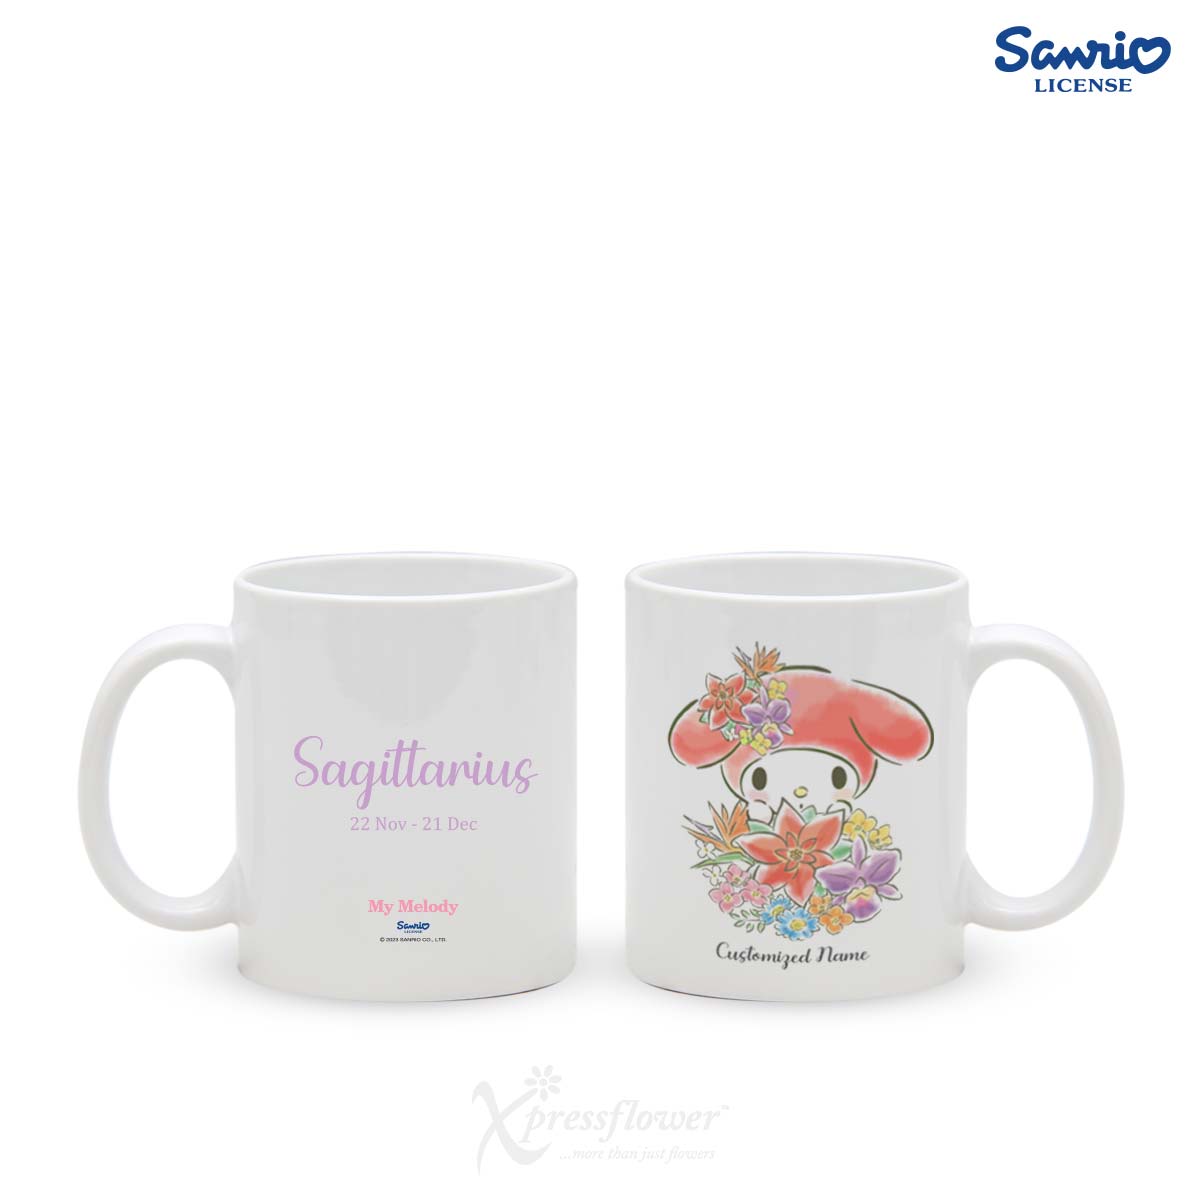 SNMG2308_Sagittarius Splendor 6 Mixed White & Yam Roses with My Melody Personalised Mug Sagittarius 1c